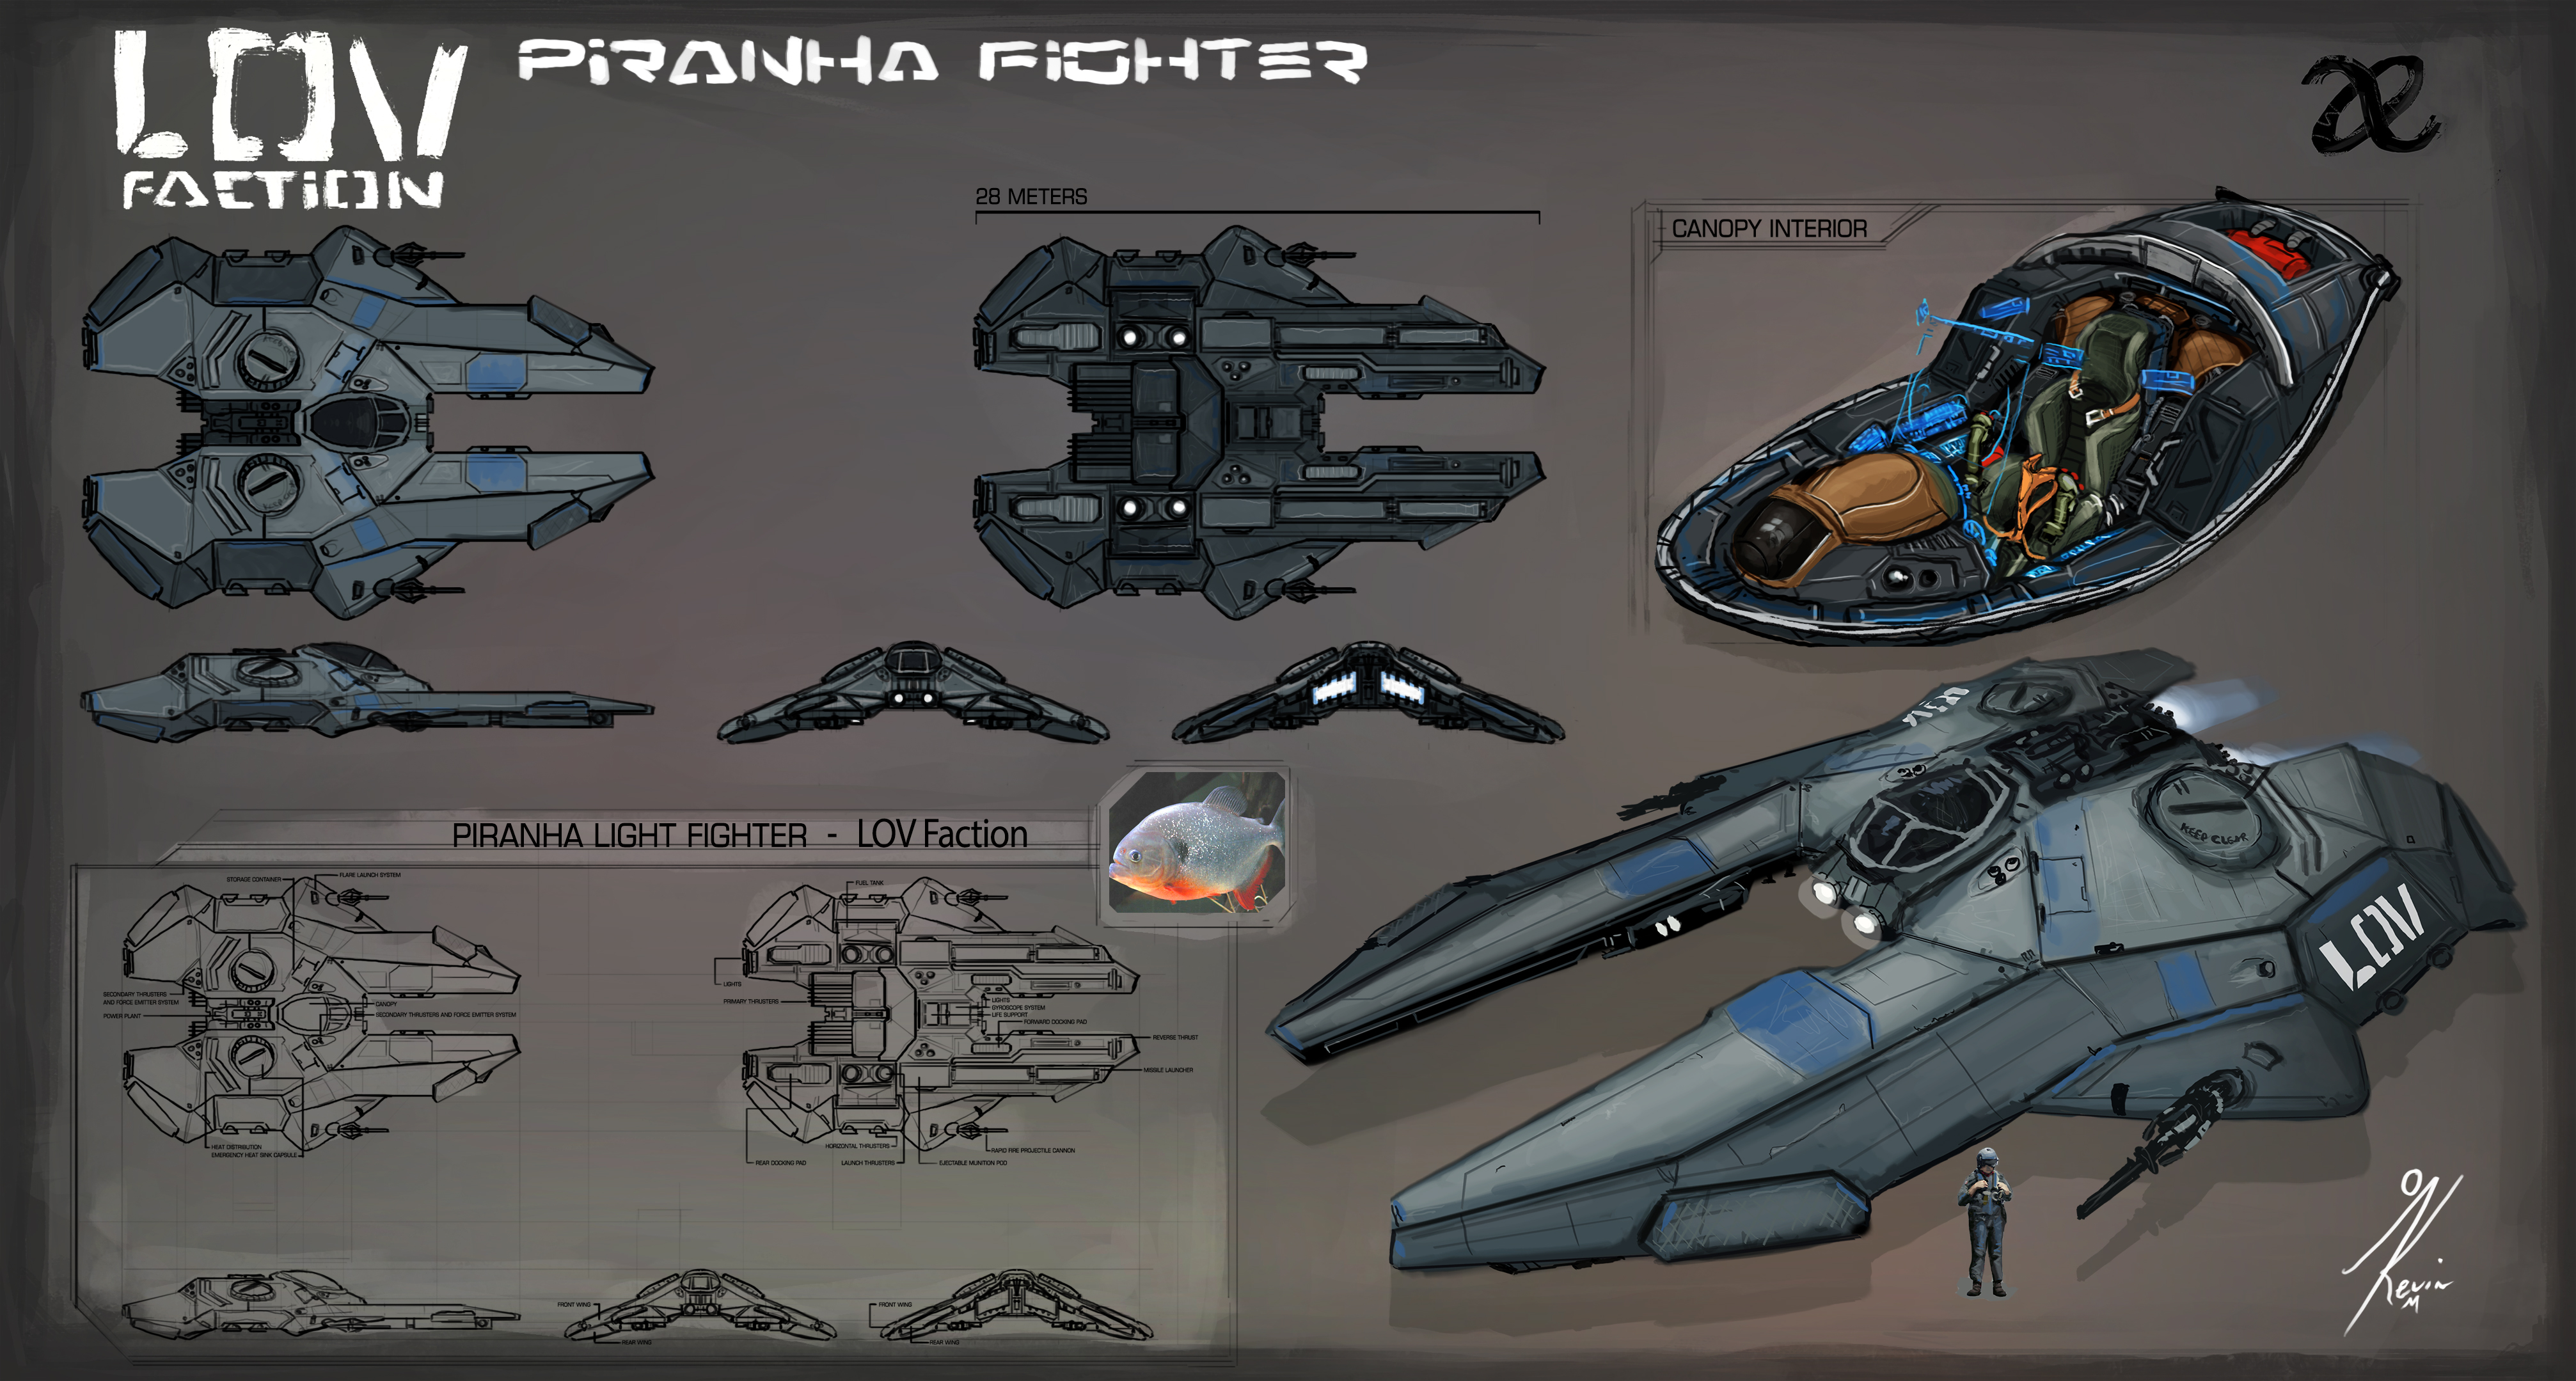 Science Fiction Concept Art Piranhas Spaceship Aircraft Blueprints Digital Art Kev Art Artwork 4027x2159